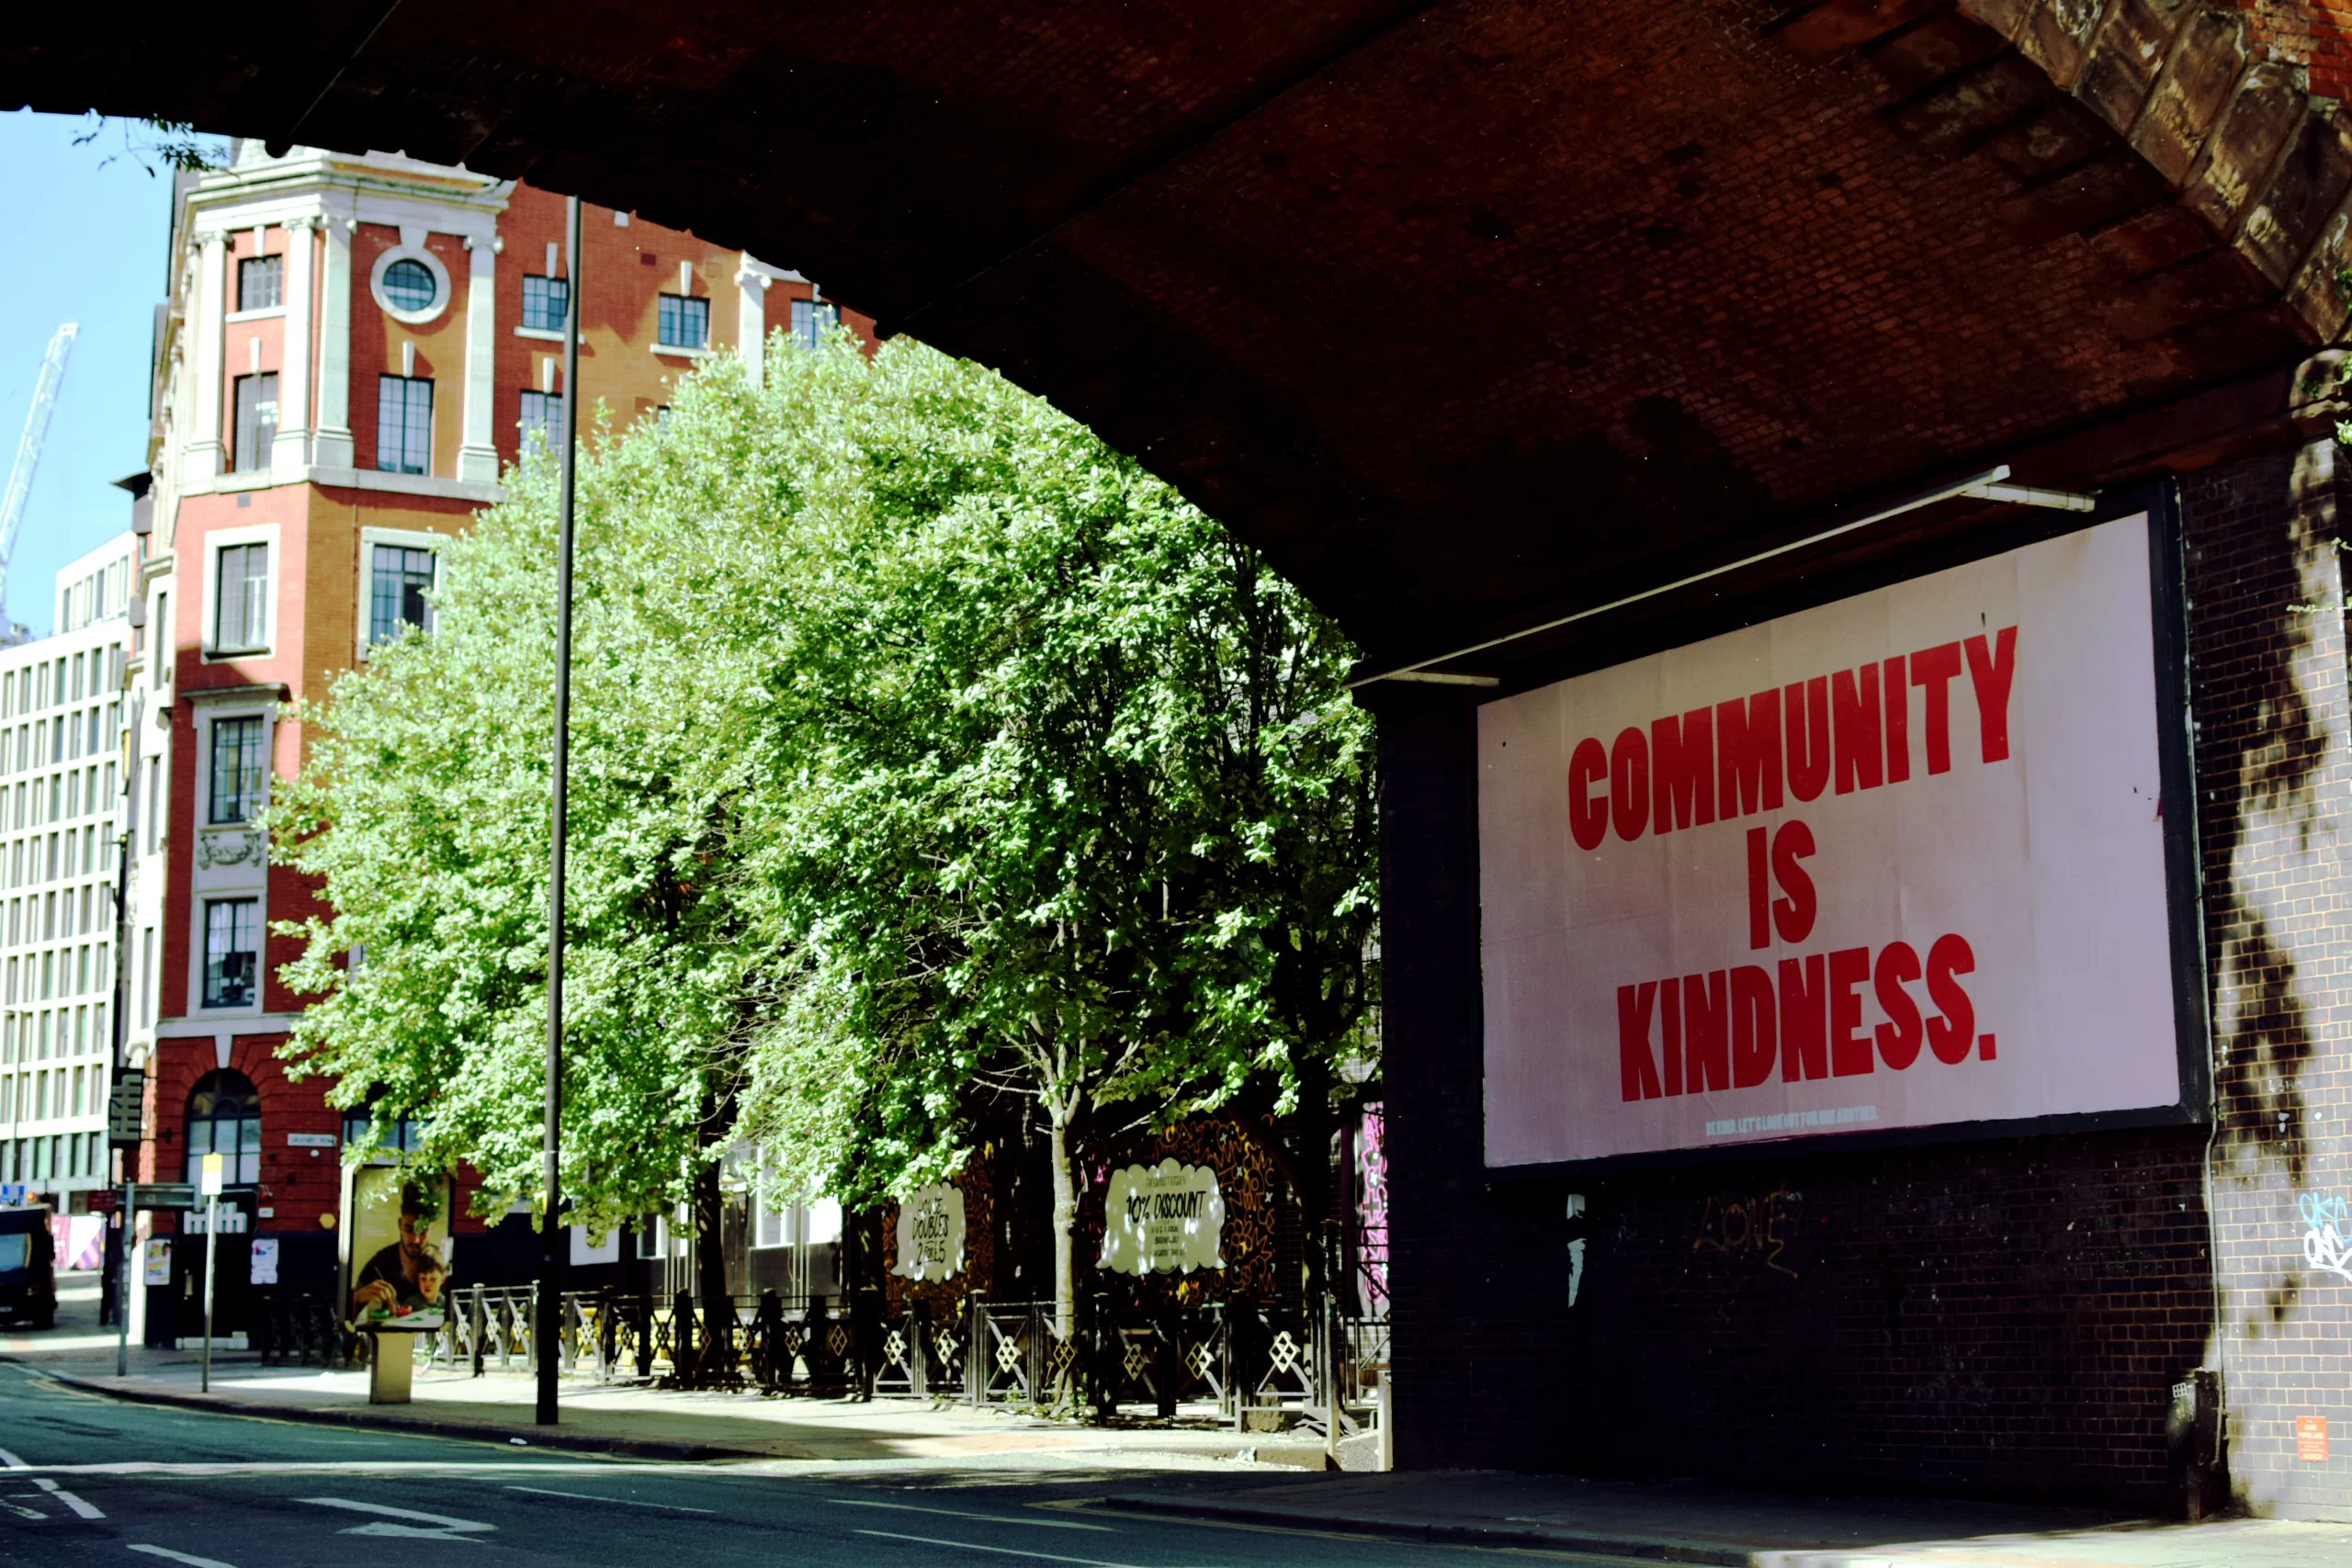 matthew-waring-under Manchester UK bridge a community board -unsplash